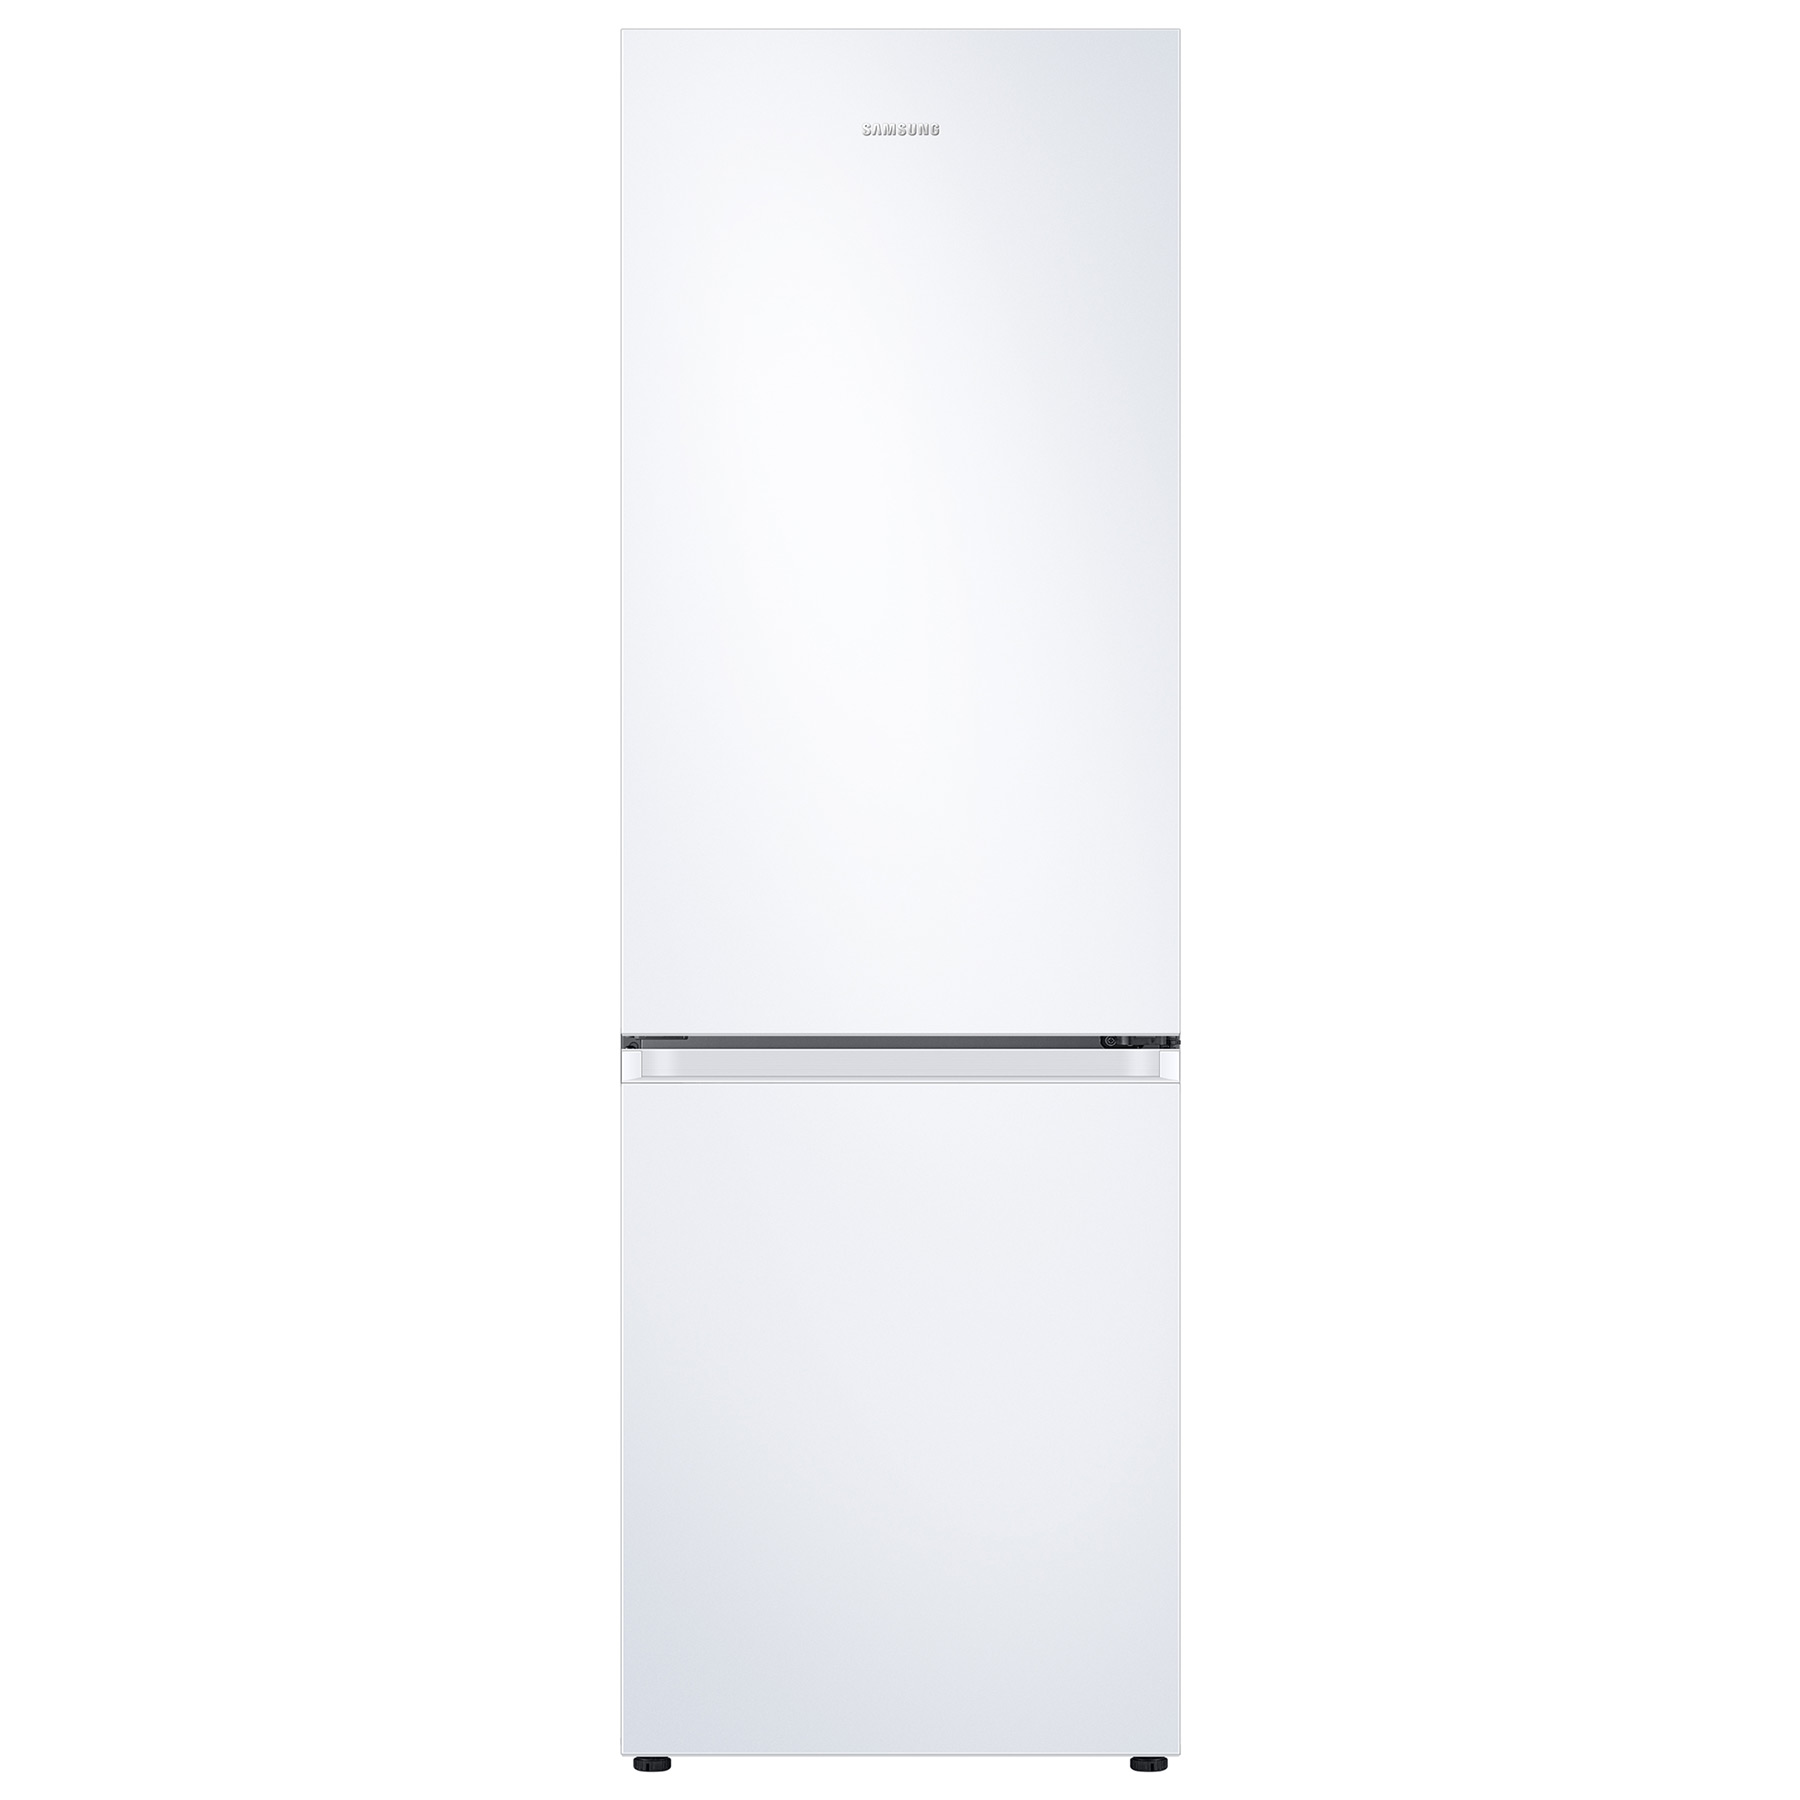 Samsung RB34T602EWW 60cm Frost Free Fridge Freezer in White 1 83m E